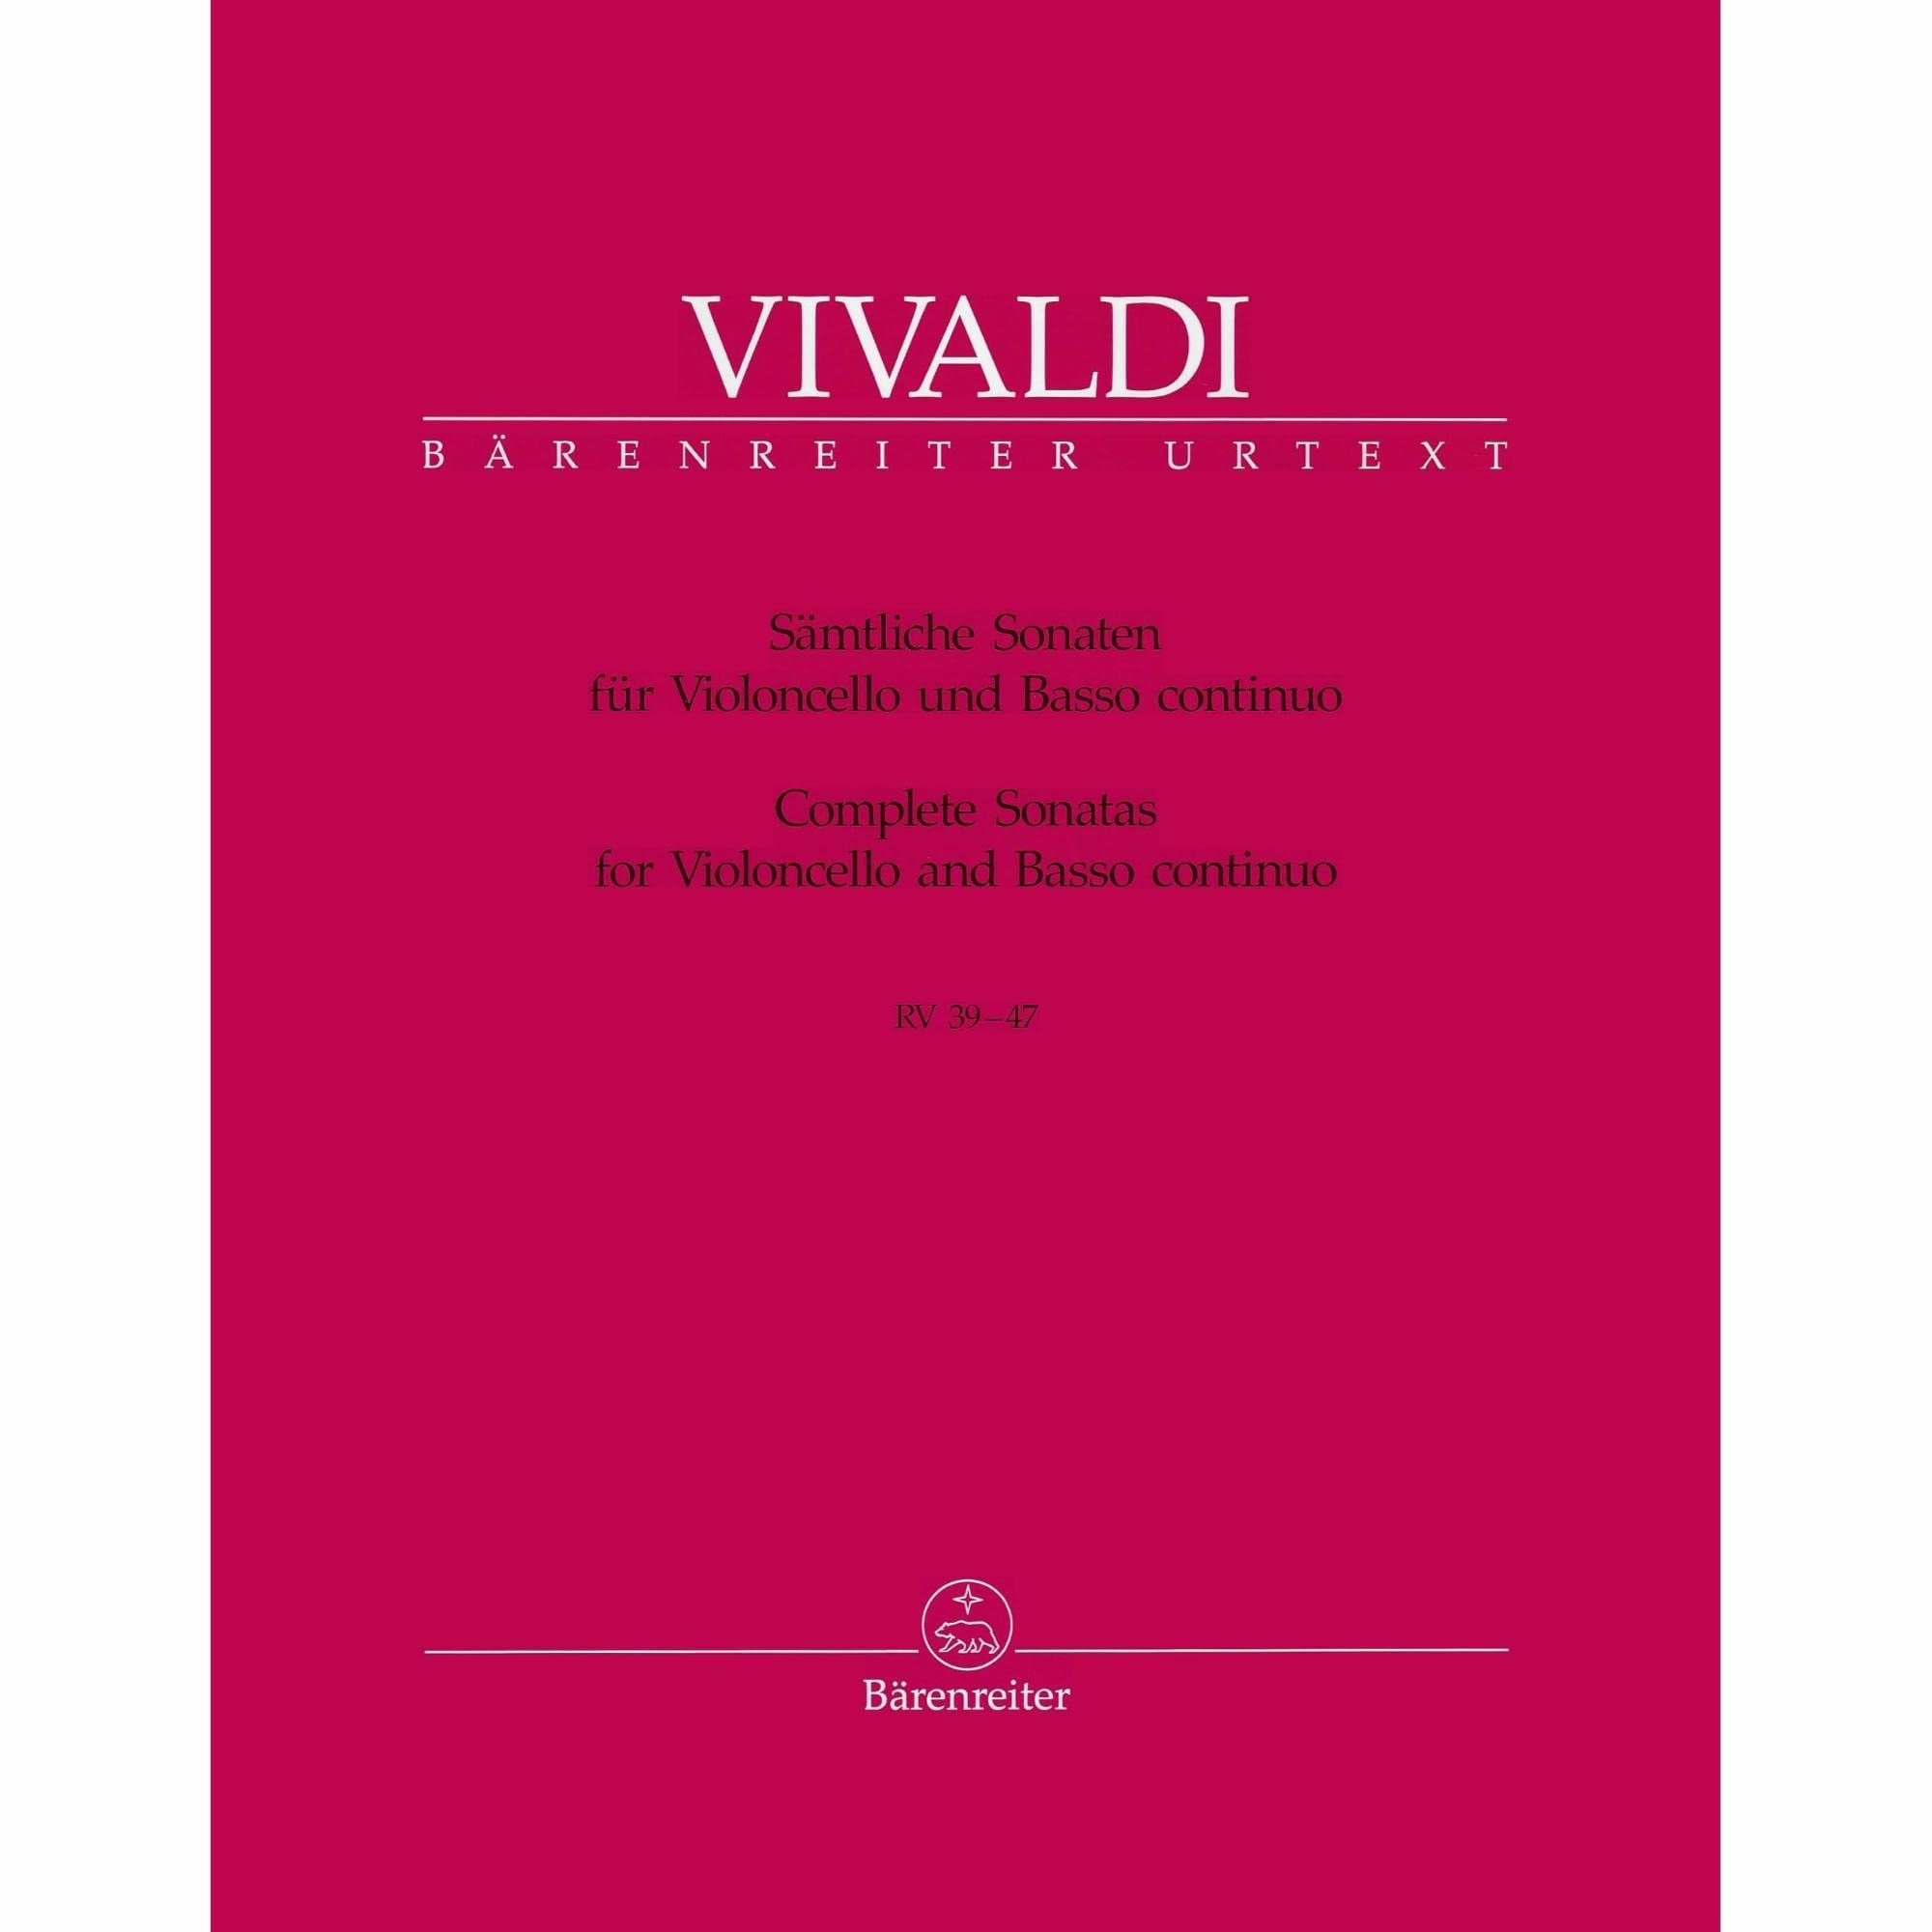 Vivaldi: Complete Sonatas for Cello published by Barenreiter